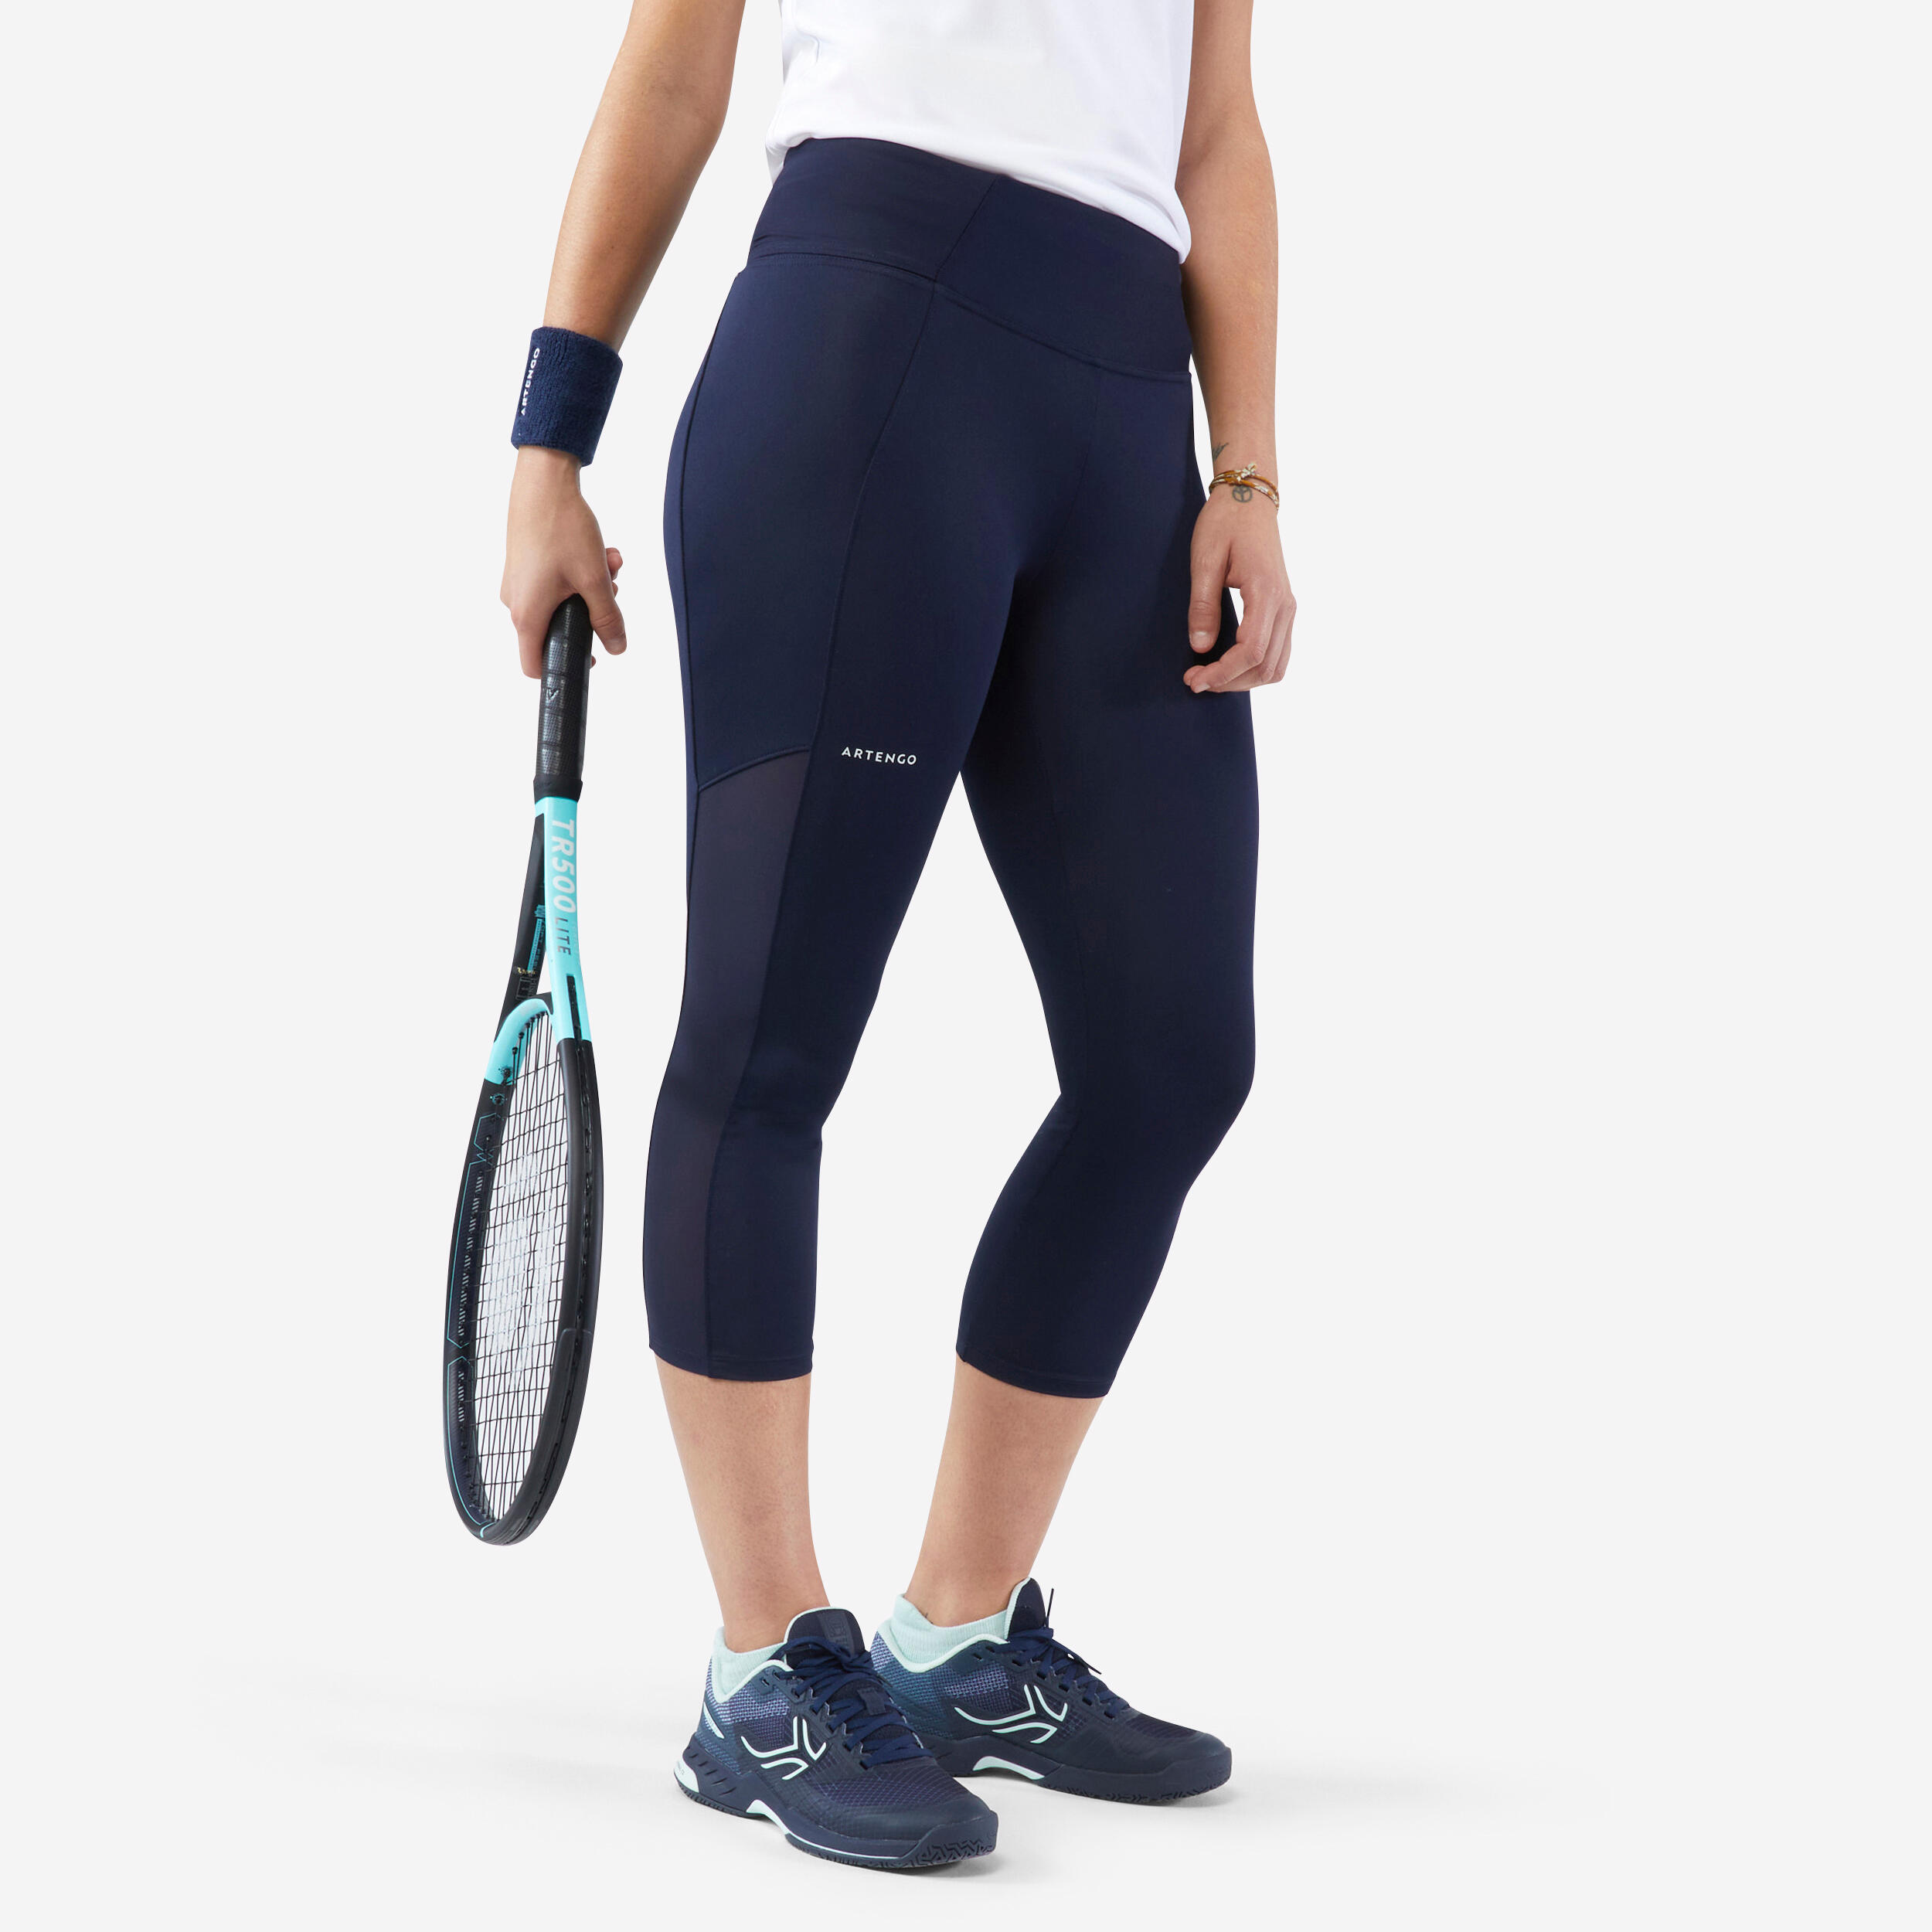 https://contents.mediadecathlon.com/p2456599/k$92ed0cffdb27f23e3bda85a632beff1c/women-s-tennis-quick-dry-cropped-leggings-hip-ball-black-artengo-8547792.jpg